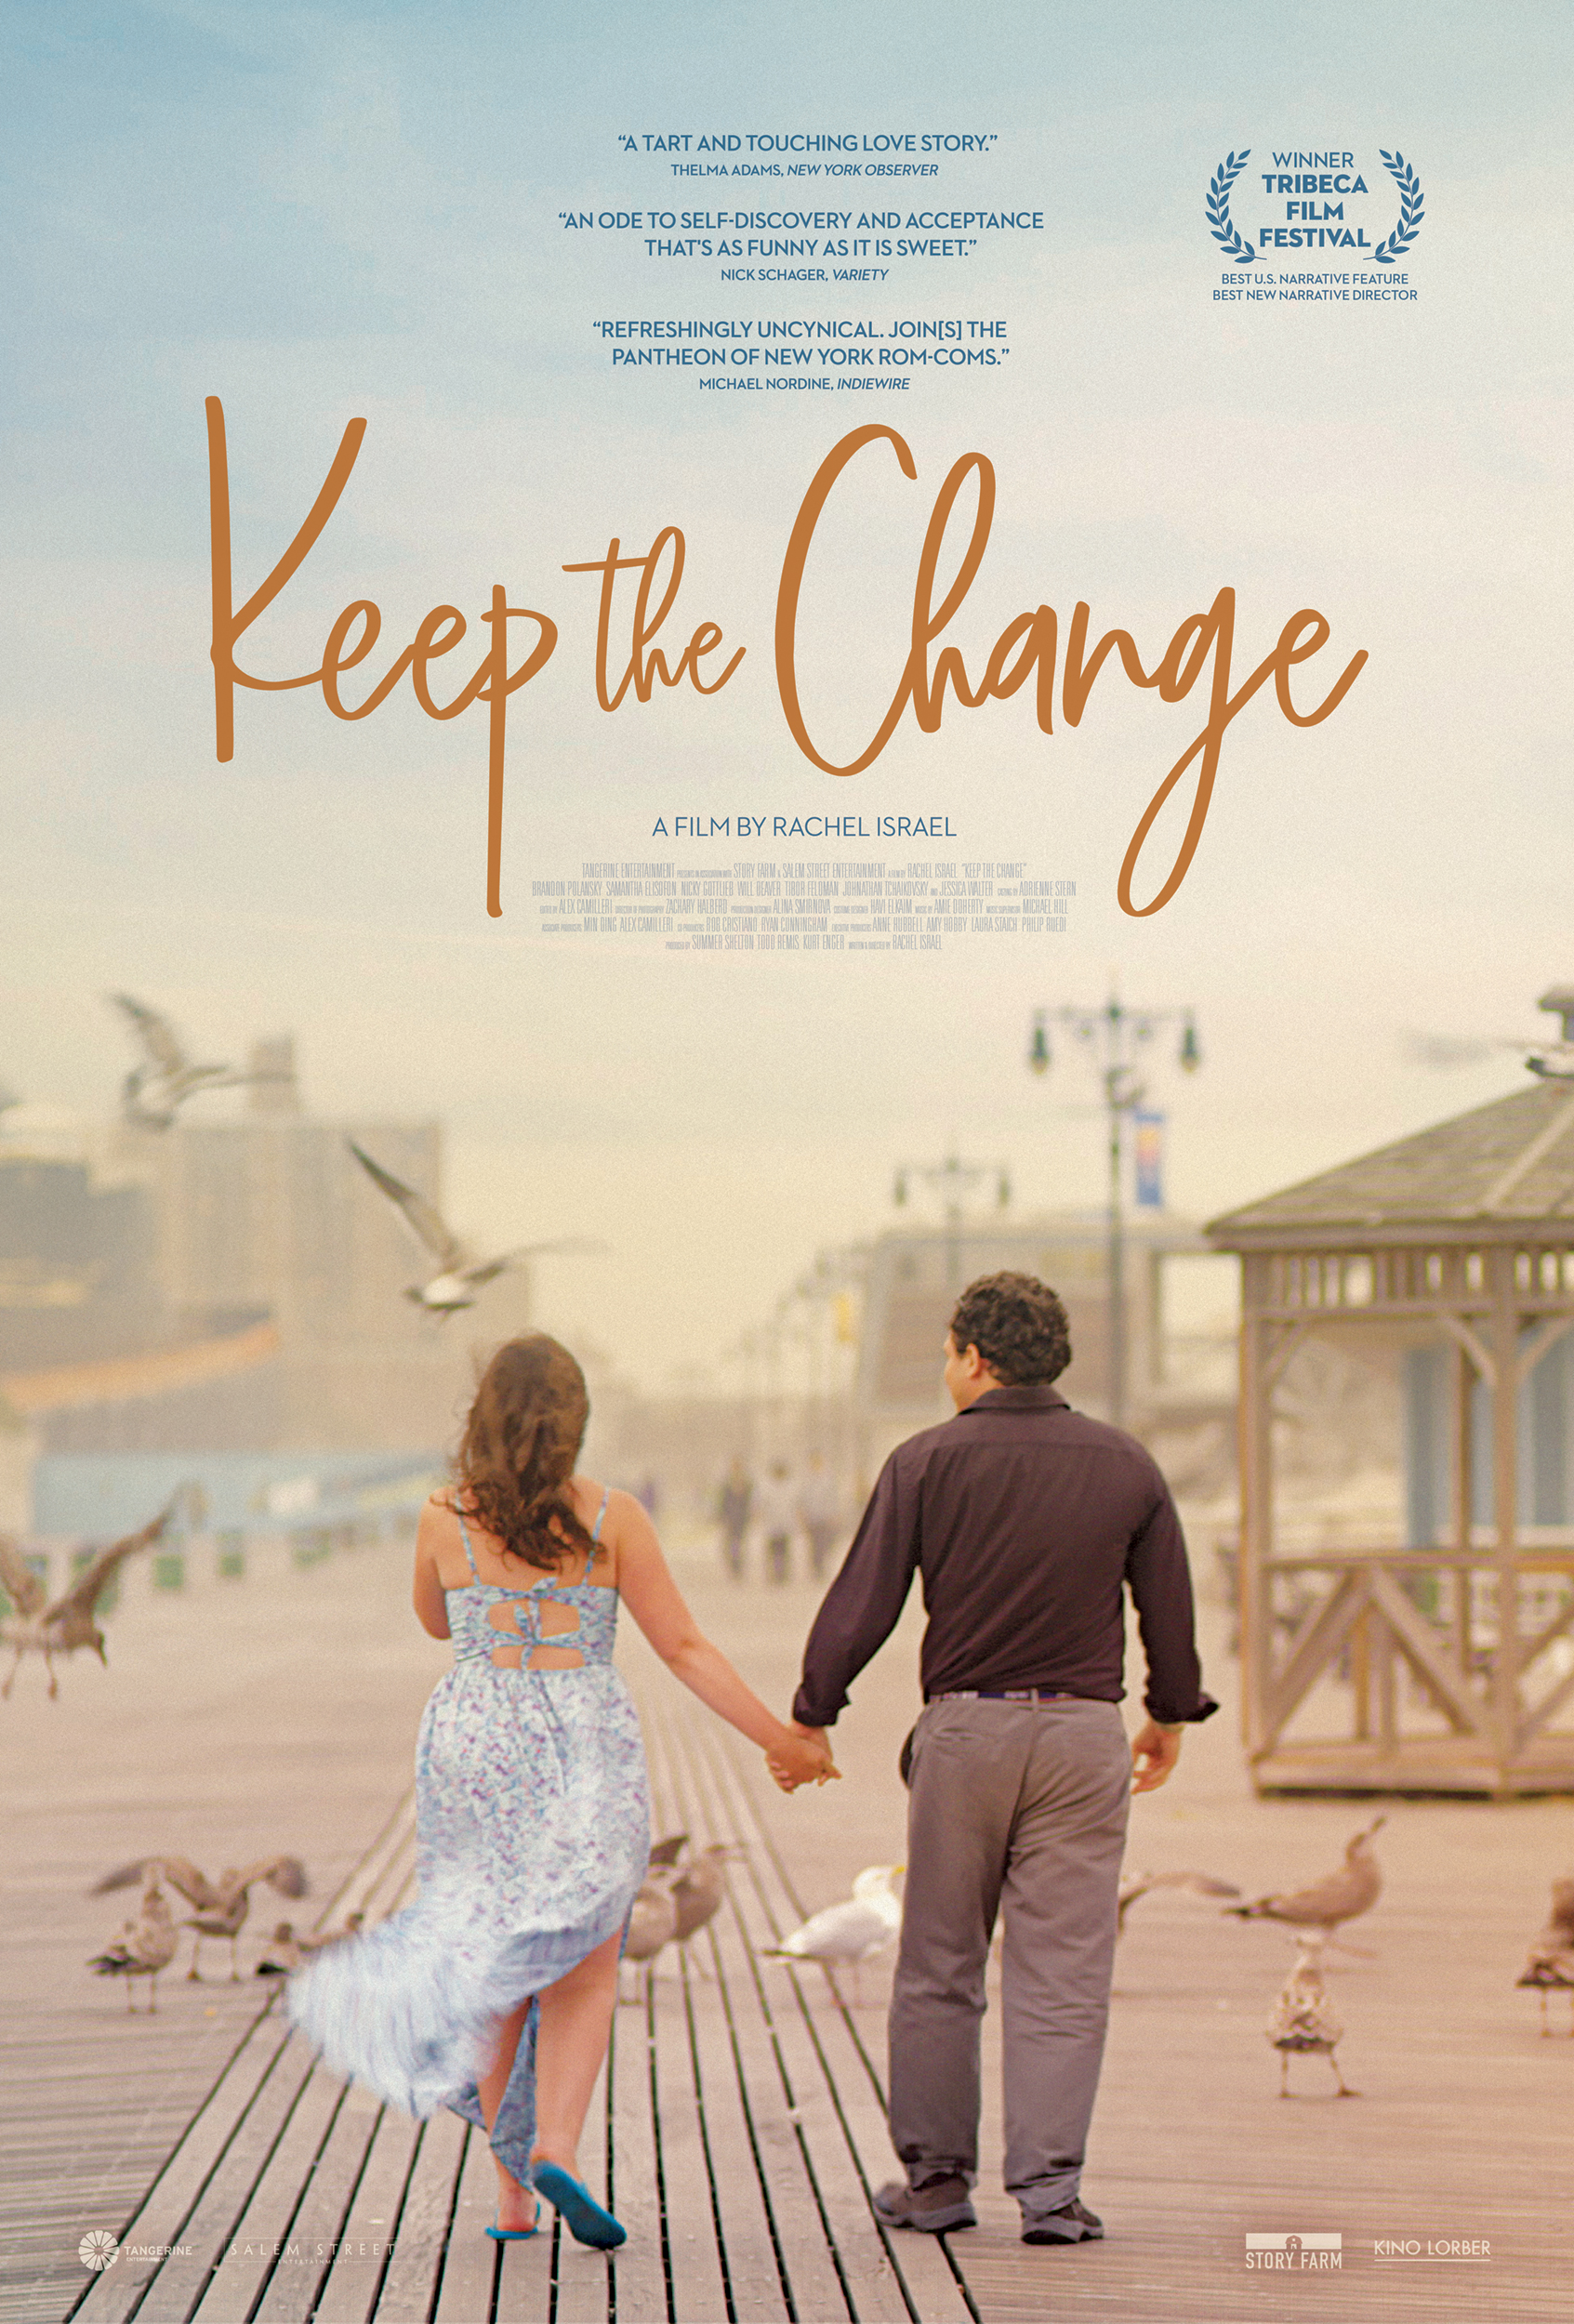 Keep the Change (trailer)